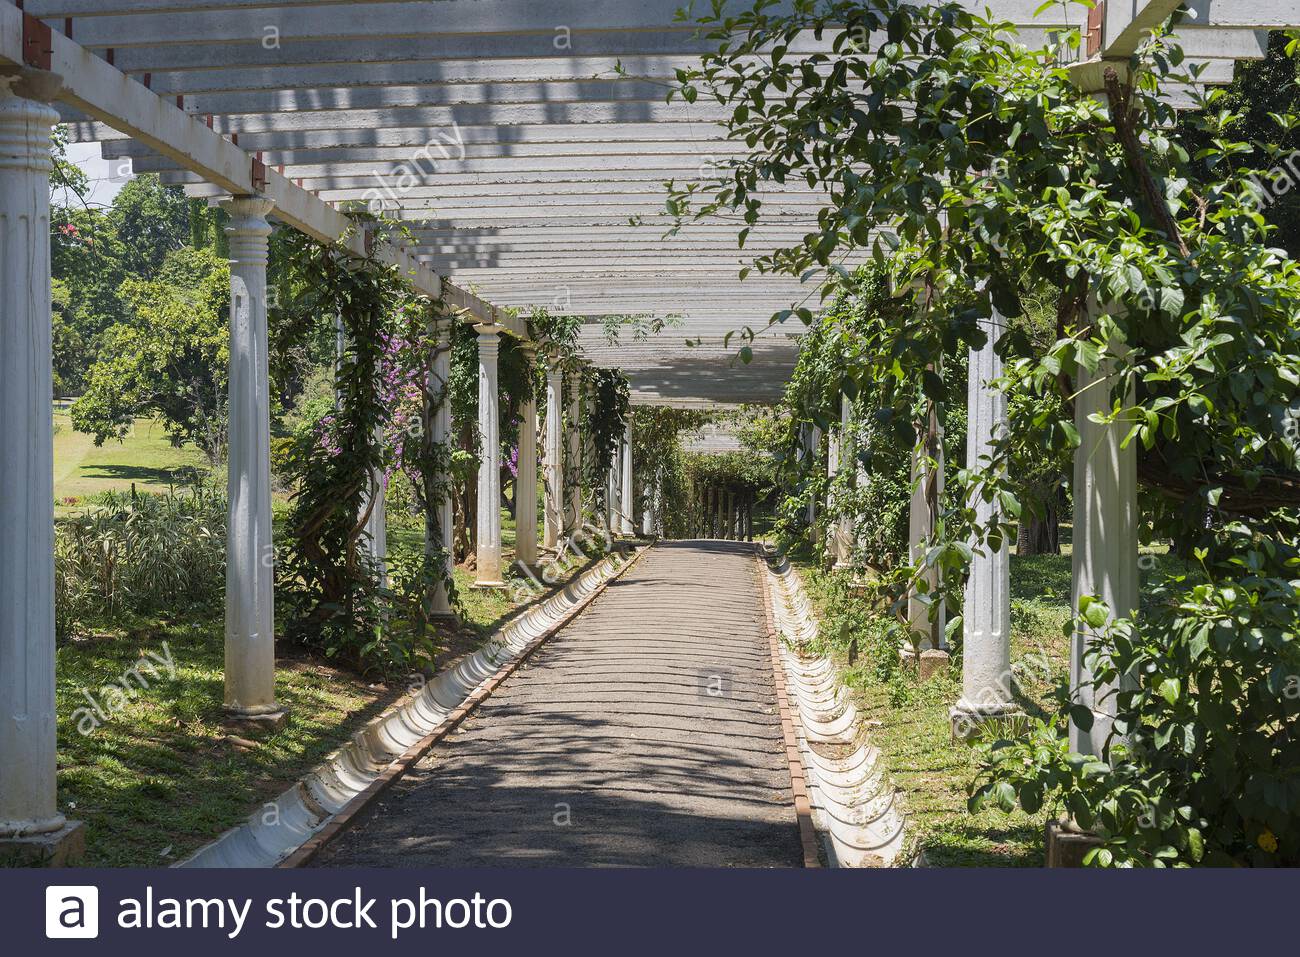 kandy peradeniya botanical gardens pergola wooden walkway with view into the distance 2B3RD23